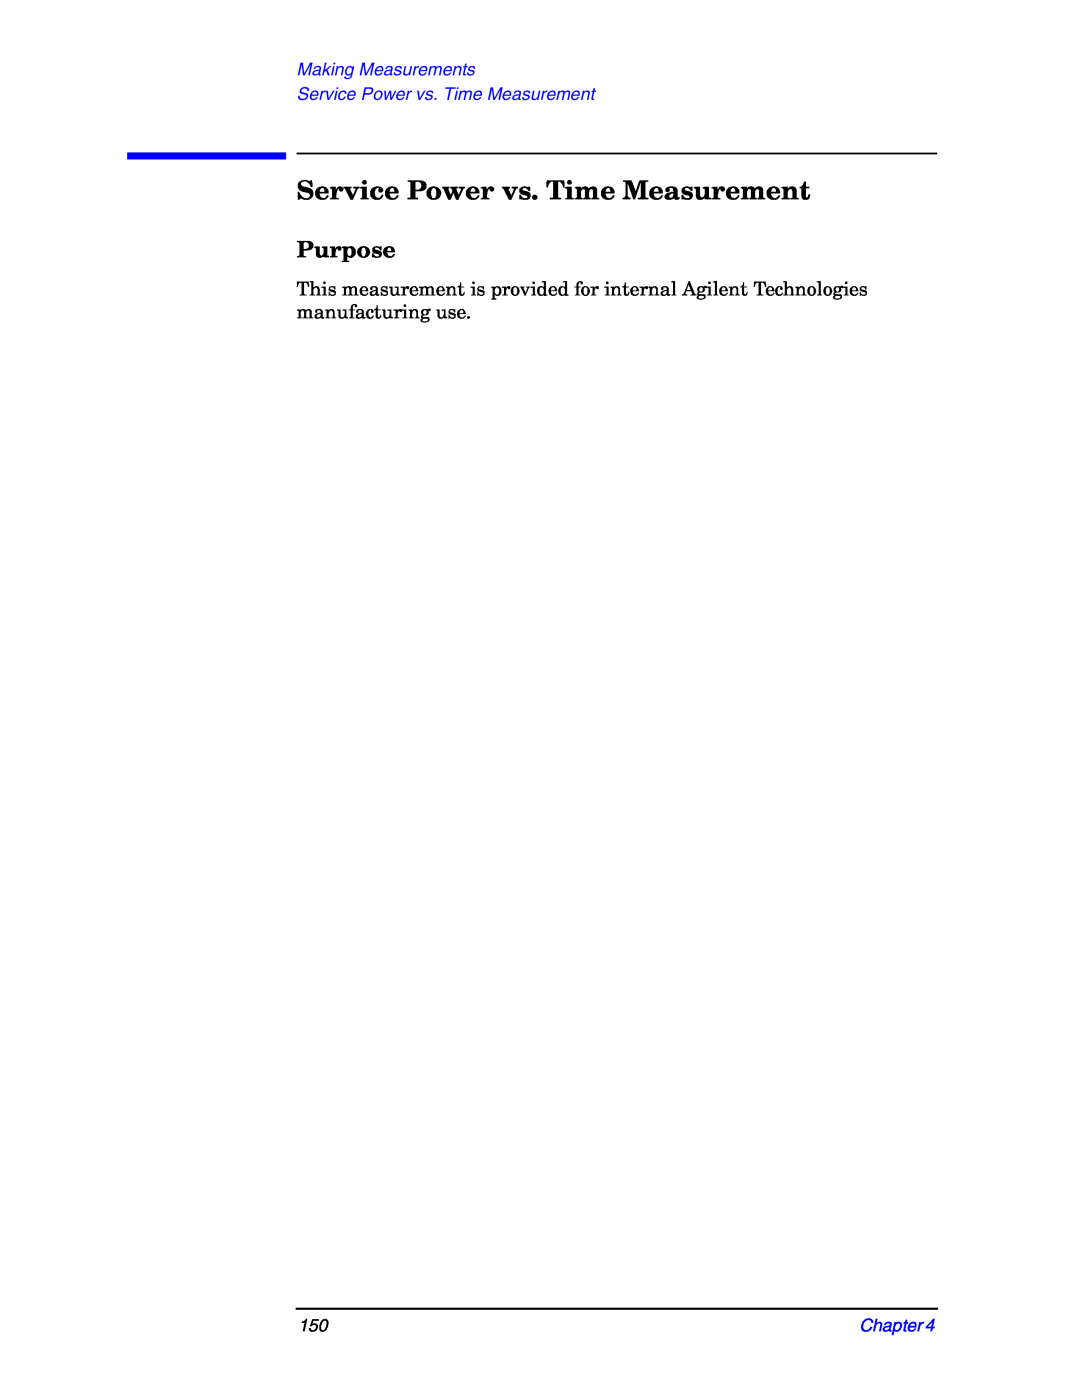 Agilent Technologies E4406A manual Service Power vs. Time Measurement, Purpose, Making Measurements, Chapter 